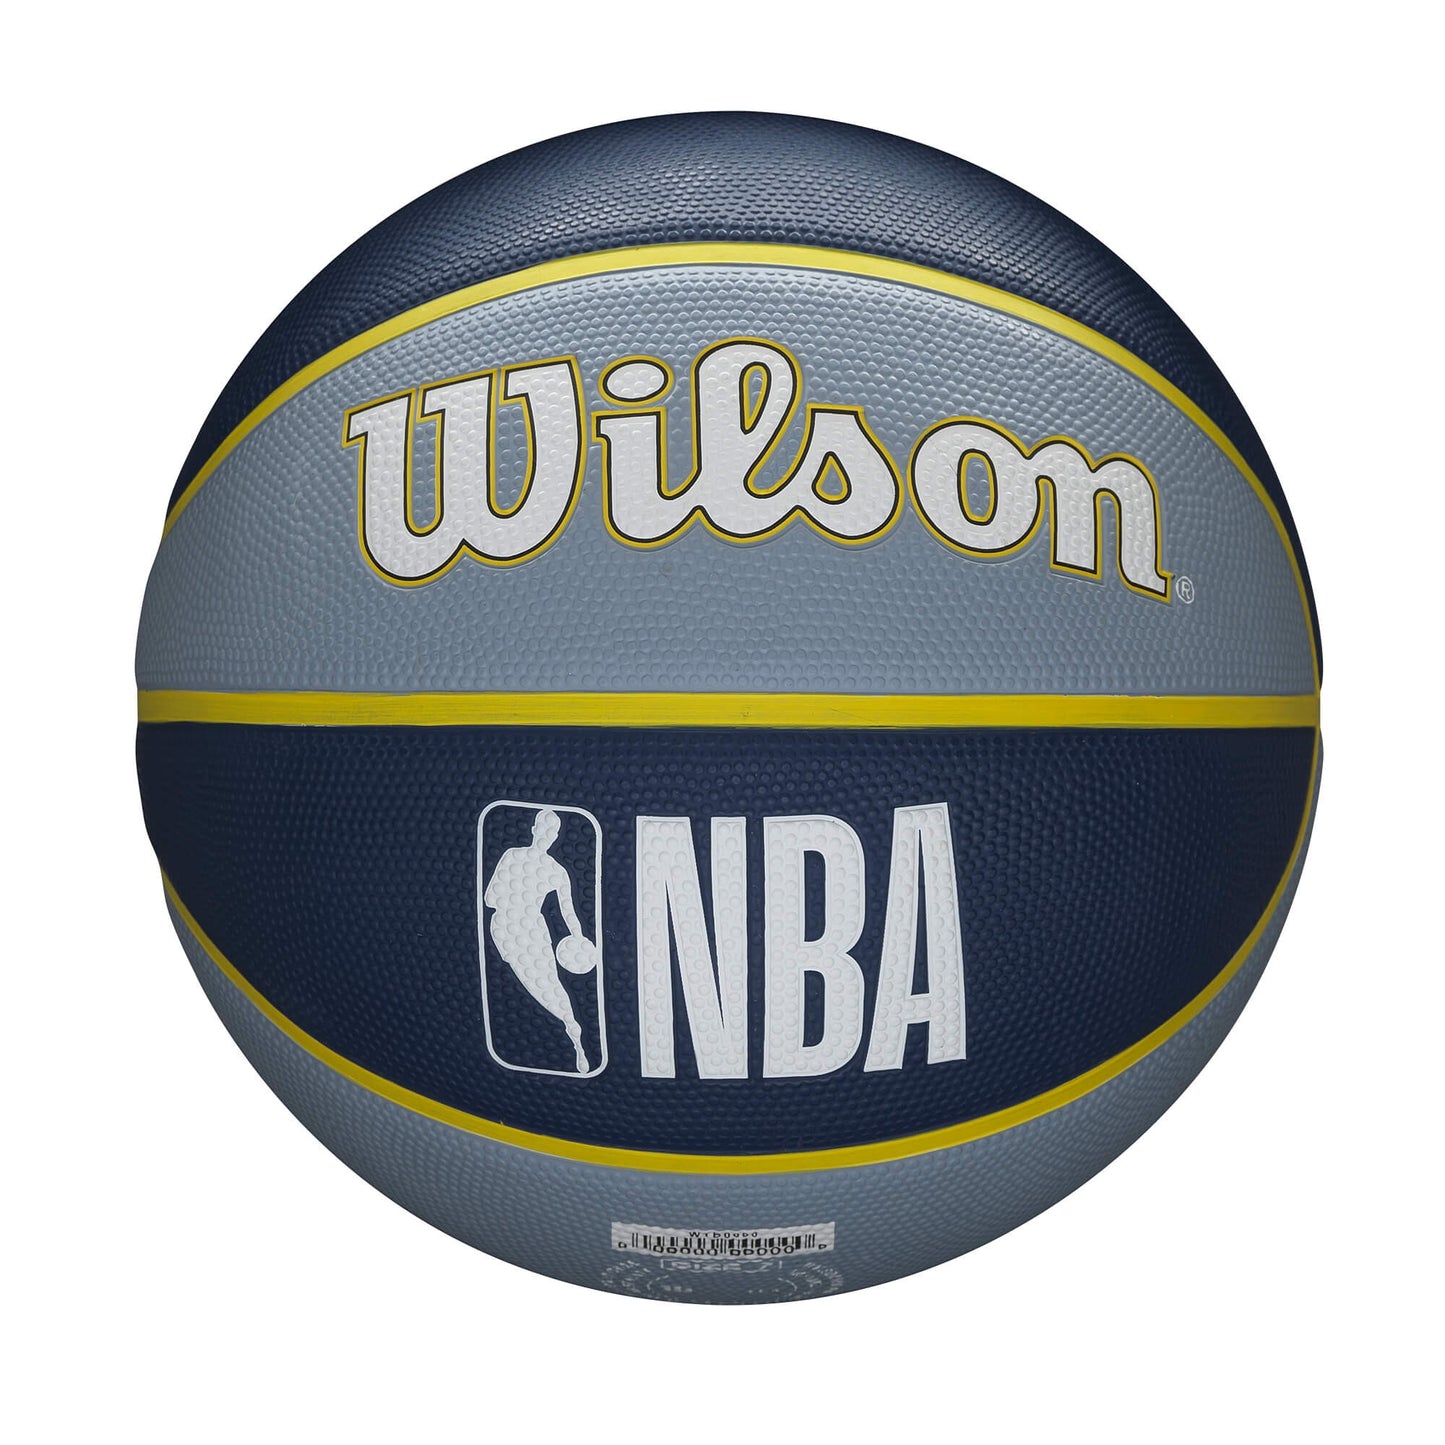 Wilson NBA Team Tribute Basketball Memphis Grizzlies (sz. 7)